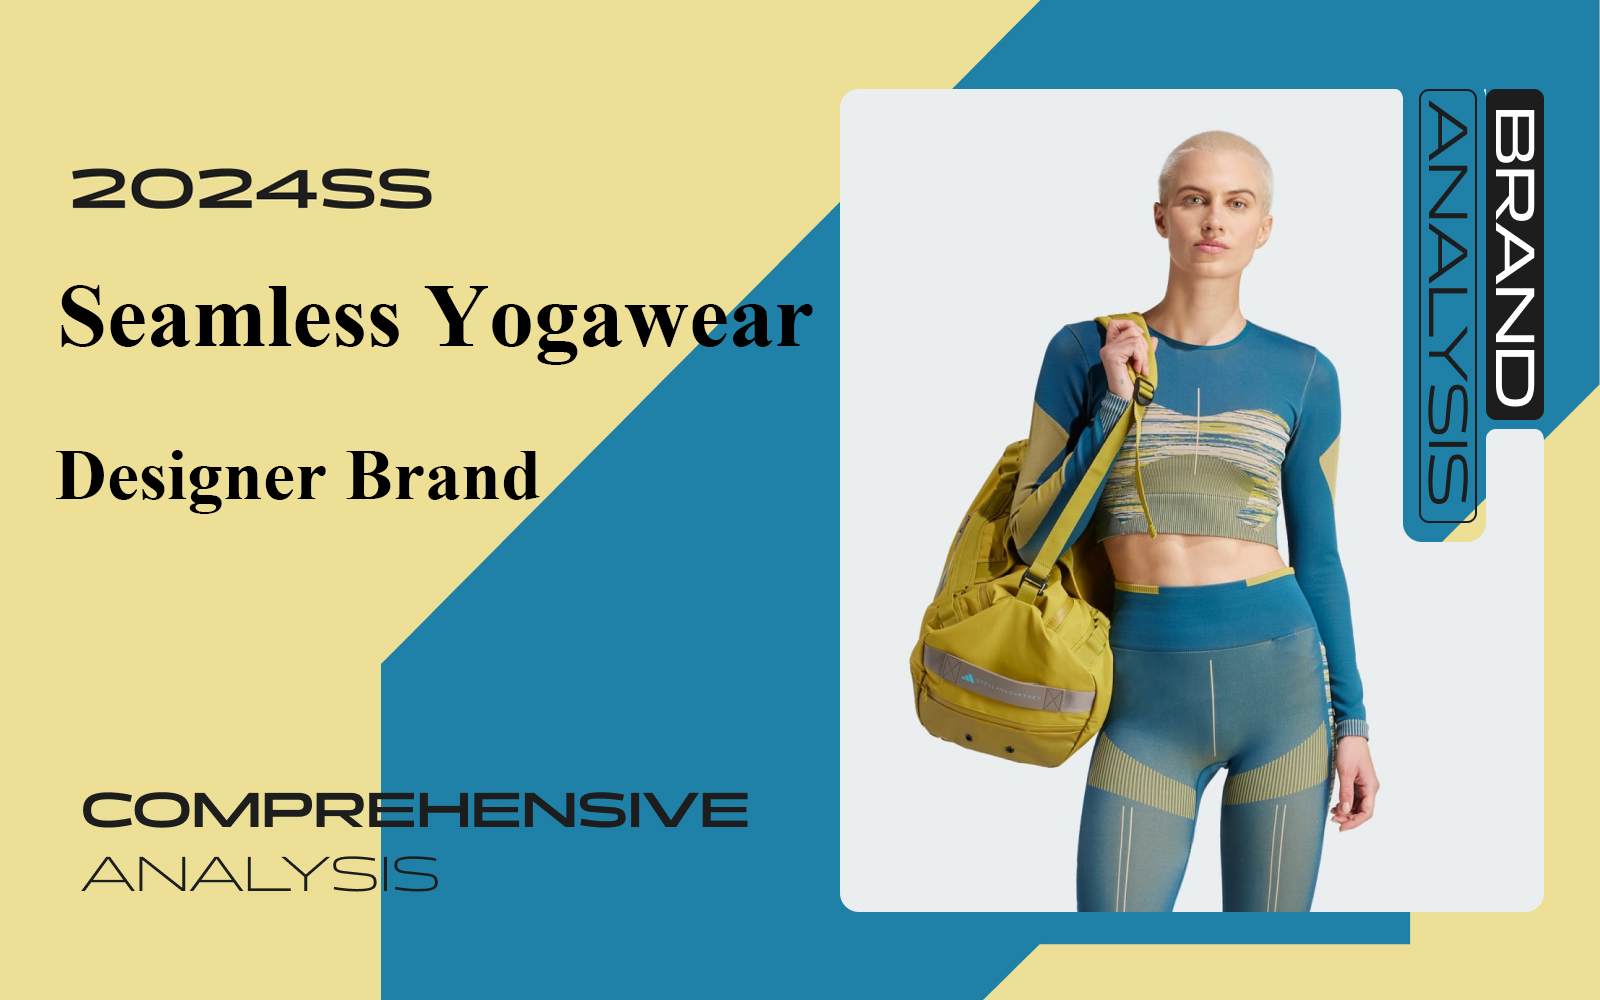 The Comprehensive Analysis of Yogawear Designer Brand